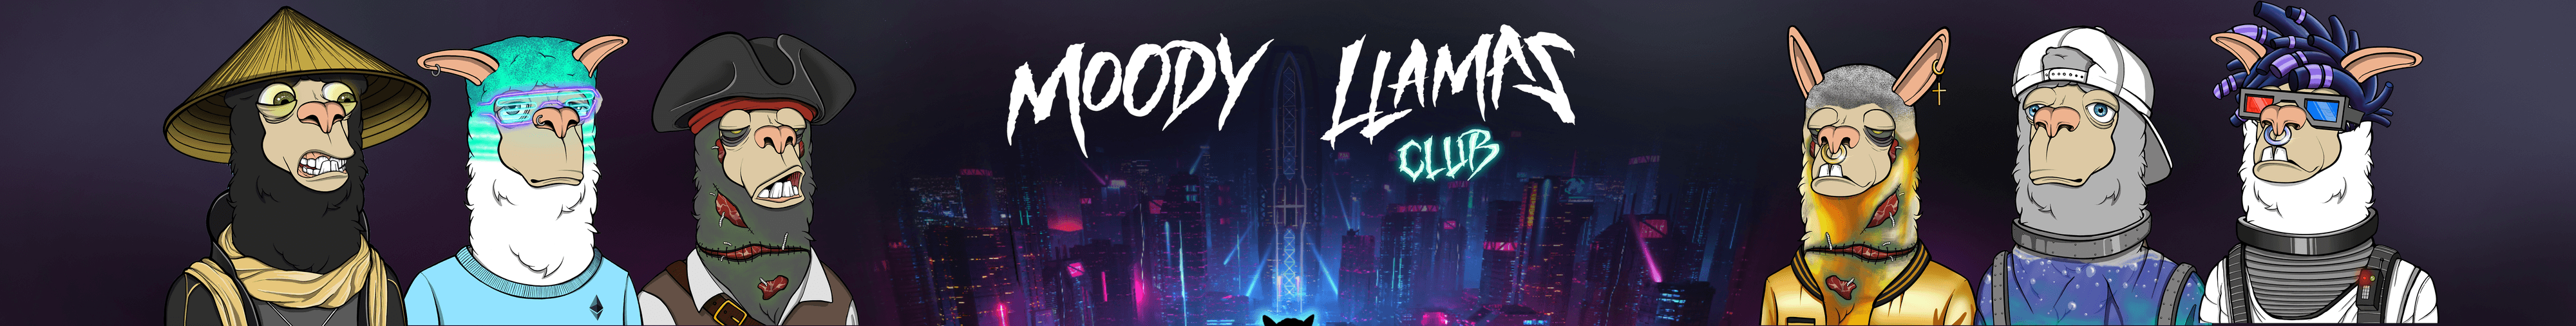 MoodyLlamasClub banner